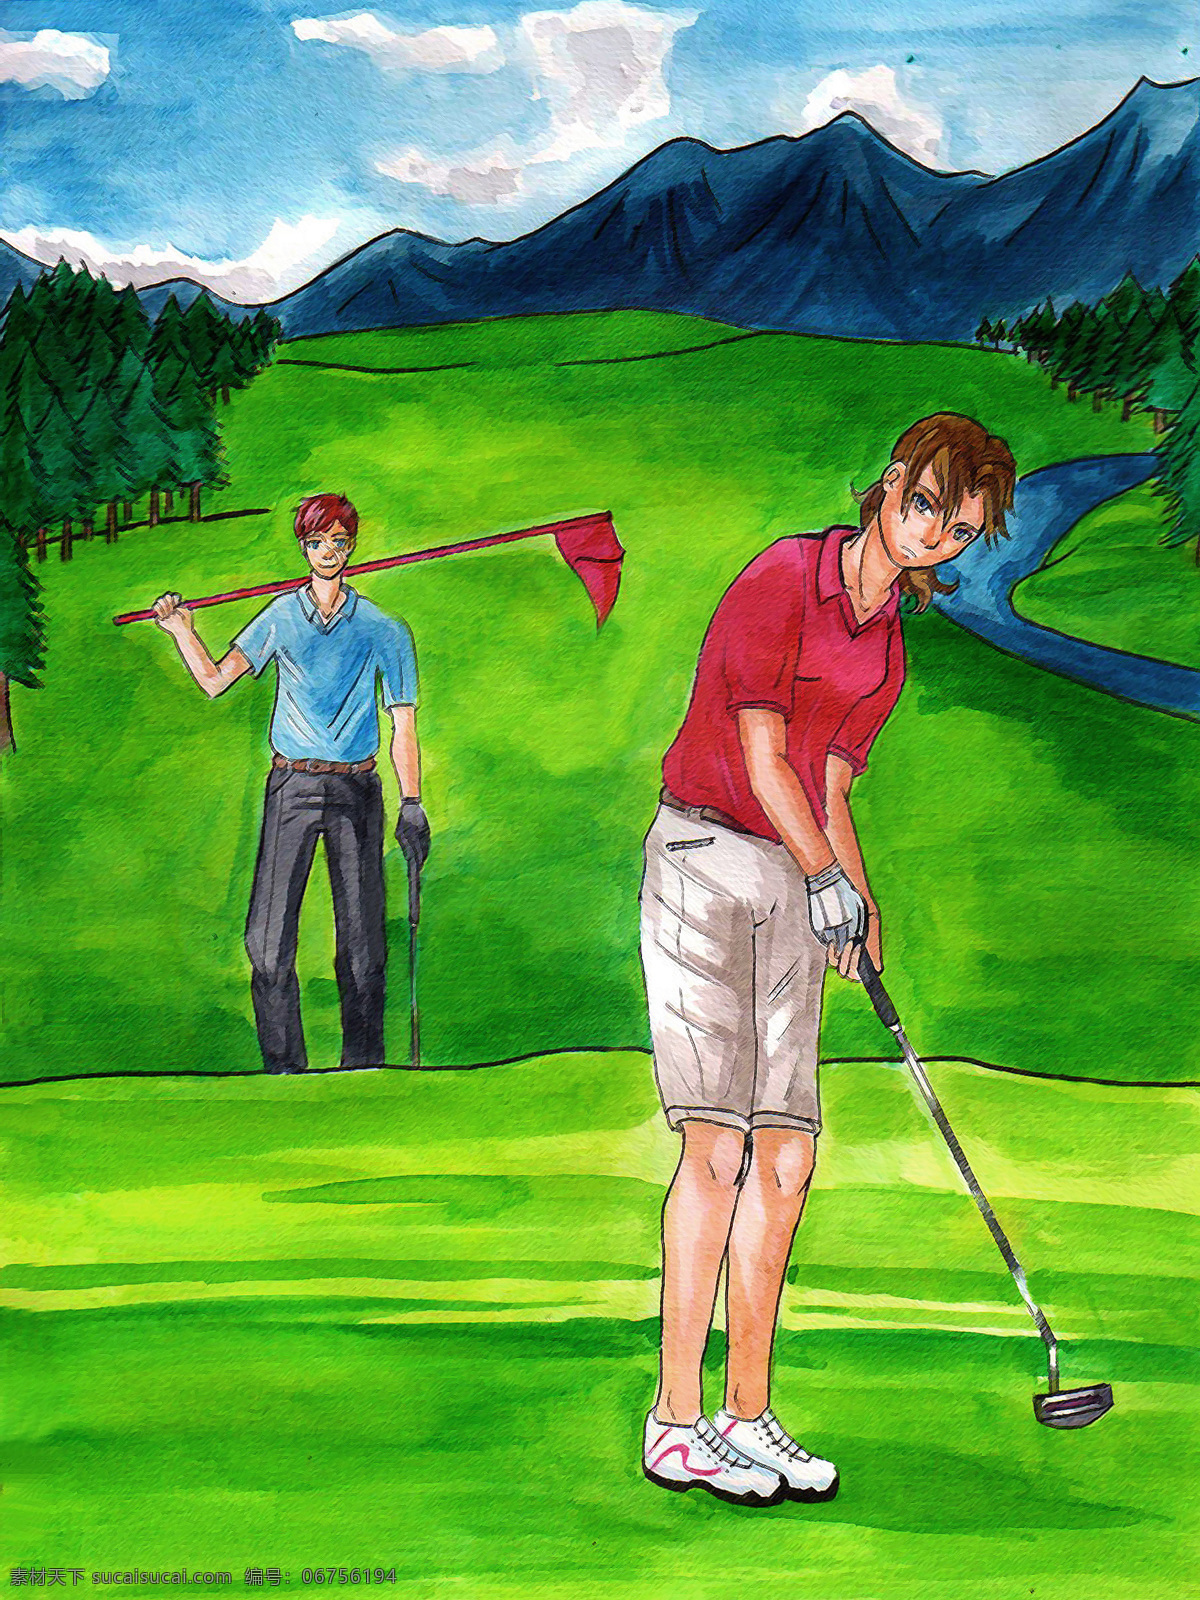 golf 高尔夫 高尔夫球 高尔夫运动 高贵 贵族 皇家 绘画 艺术设计 艺术 模板下载 高尔夫艺术 圣安德鲁斯 苏格兰 果岭 球道 苏格兰文化 高球 体育 皇室运动 球场 油画 人物 体育运动 文化艺术 装饰素材